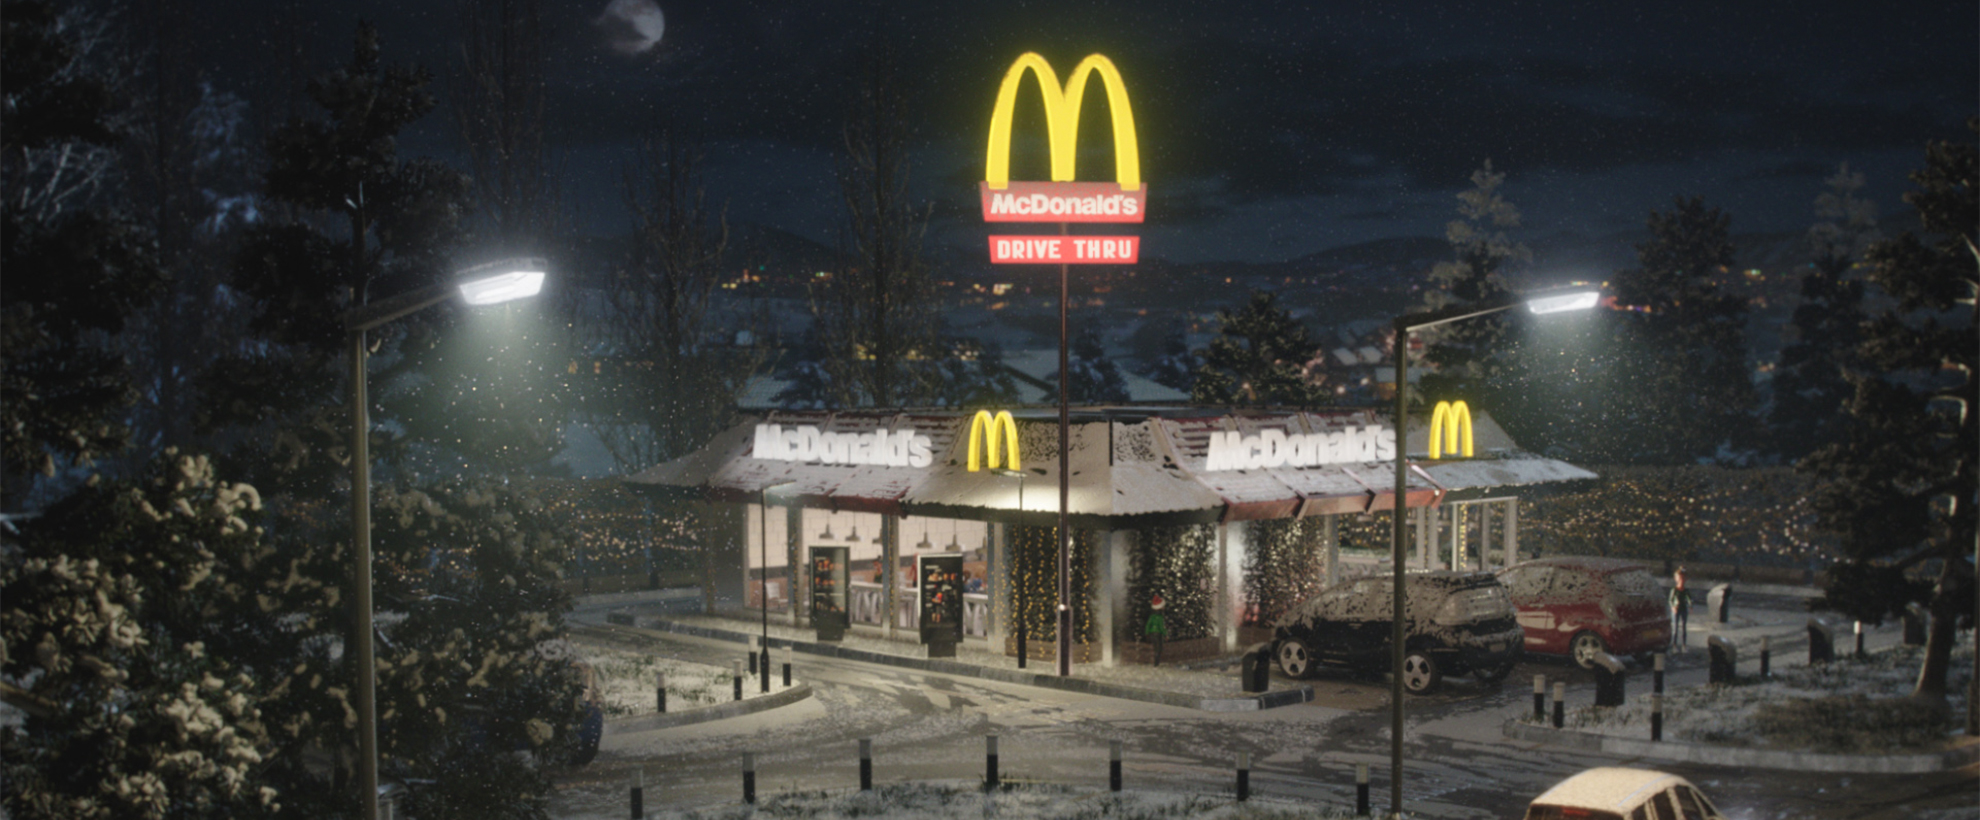 McDonald's restaurant on a snowy night